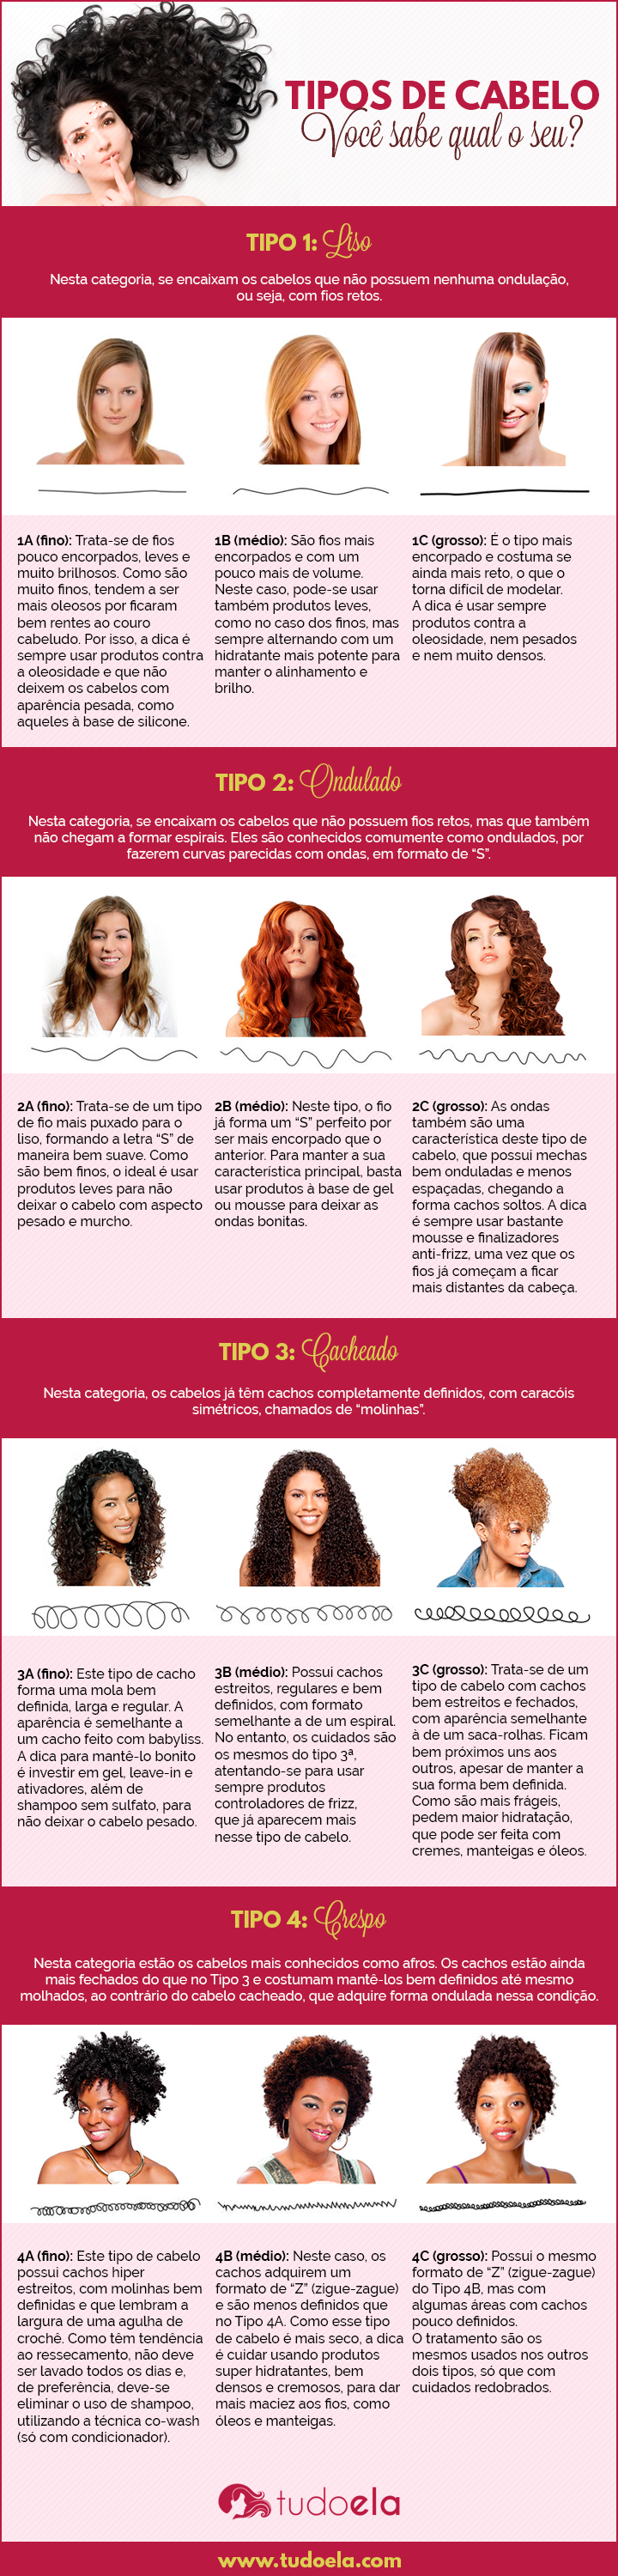 Tipos de cabelo infográfico